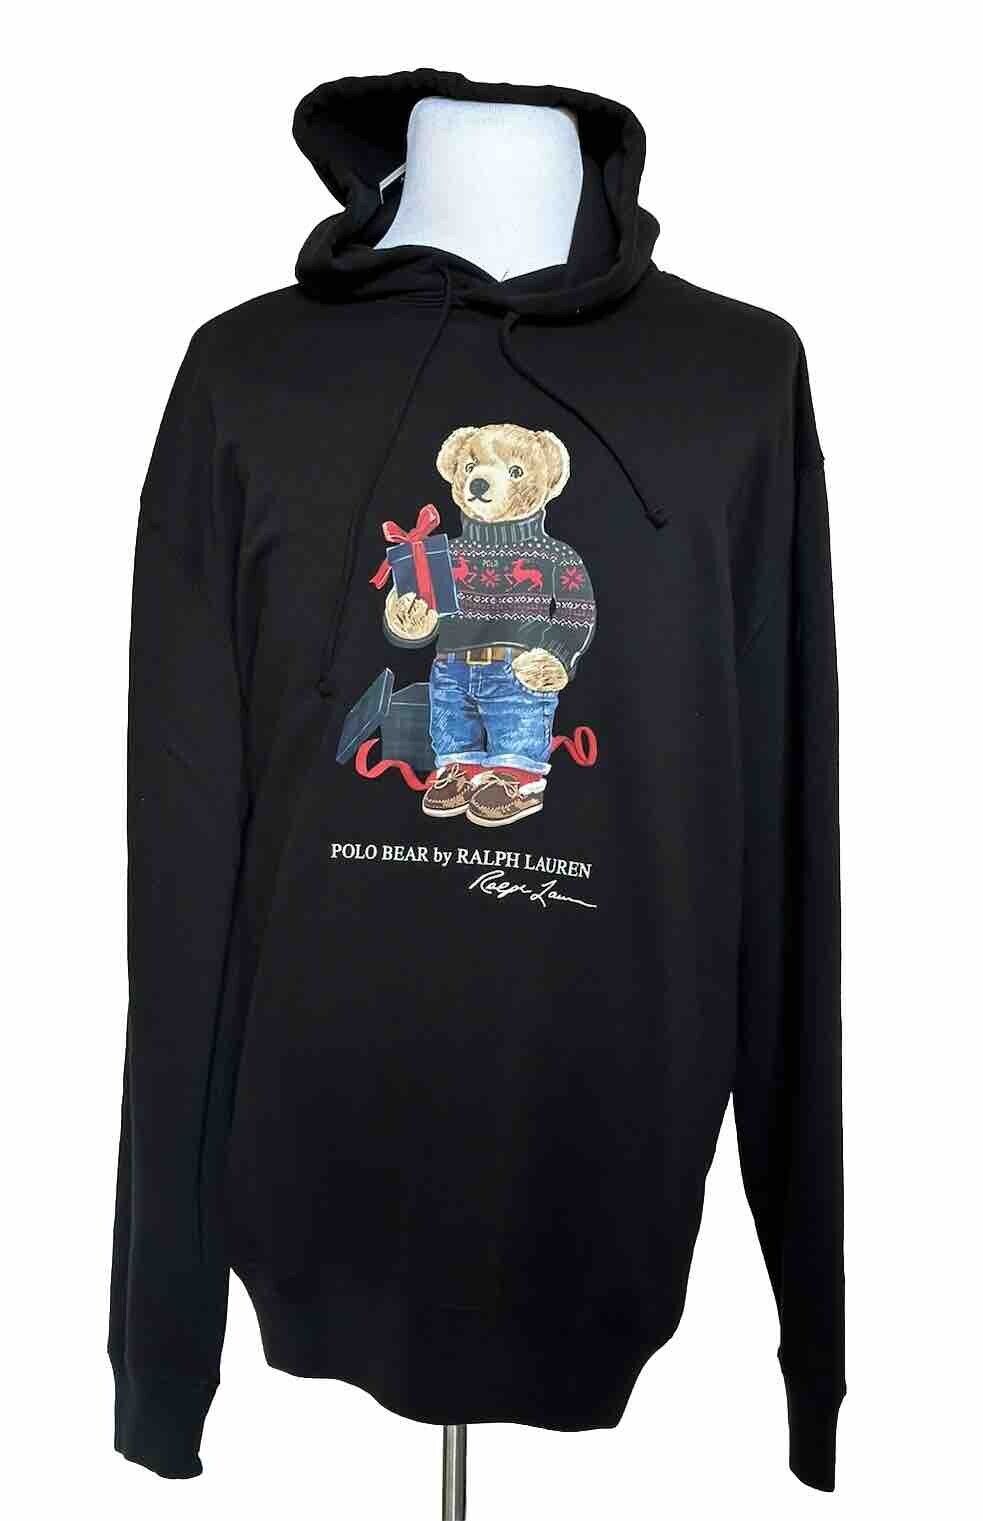 NWT $188 Polo Ralph Lauren Bear Sweatshirt with Hoodie Black 3XB/3TG